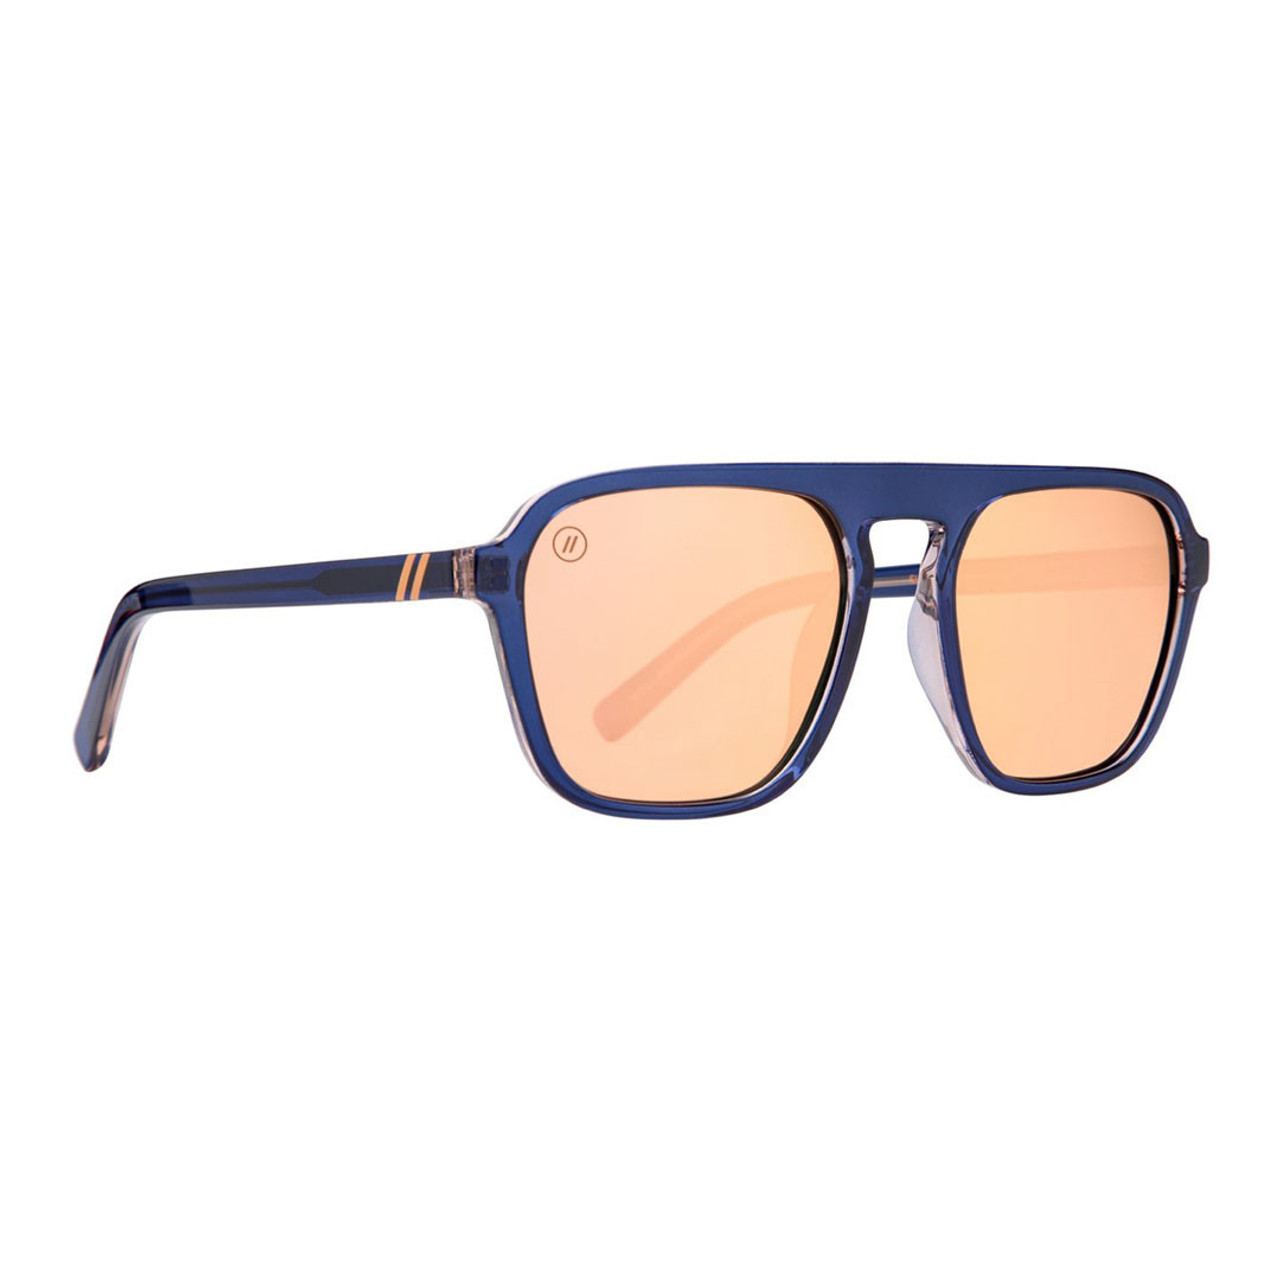 kalorie Monograph parallel GG0584S pilot-frame sunglasses - Blenders Sugar Mac Sunglasses - JECR'S